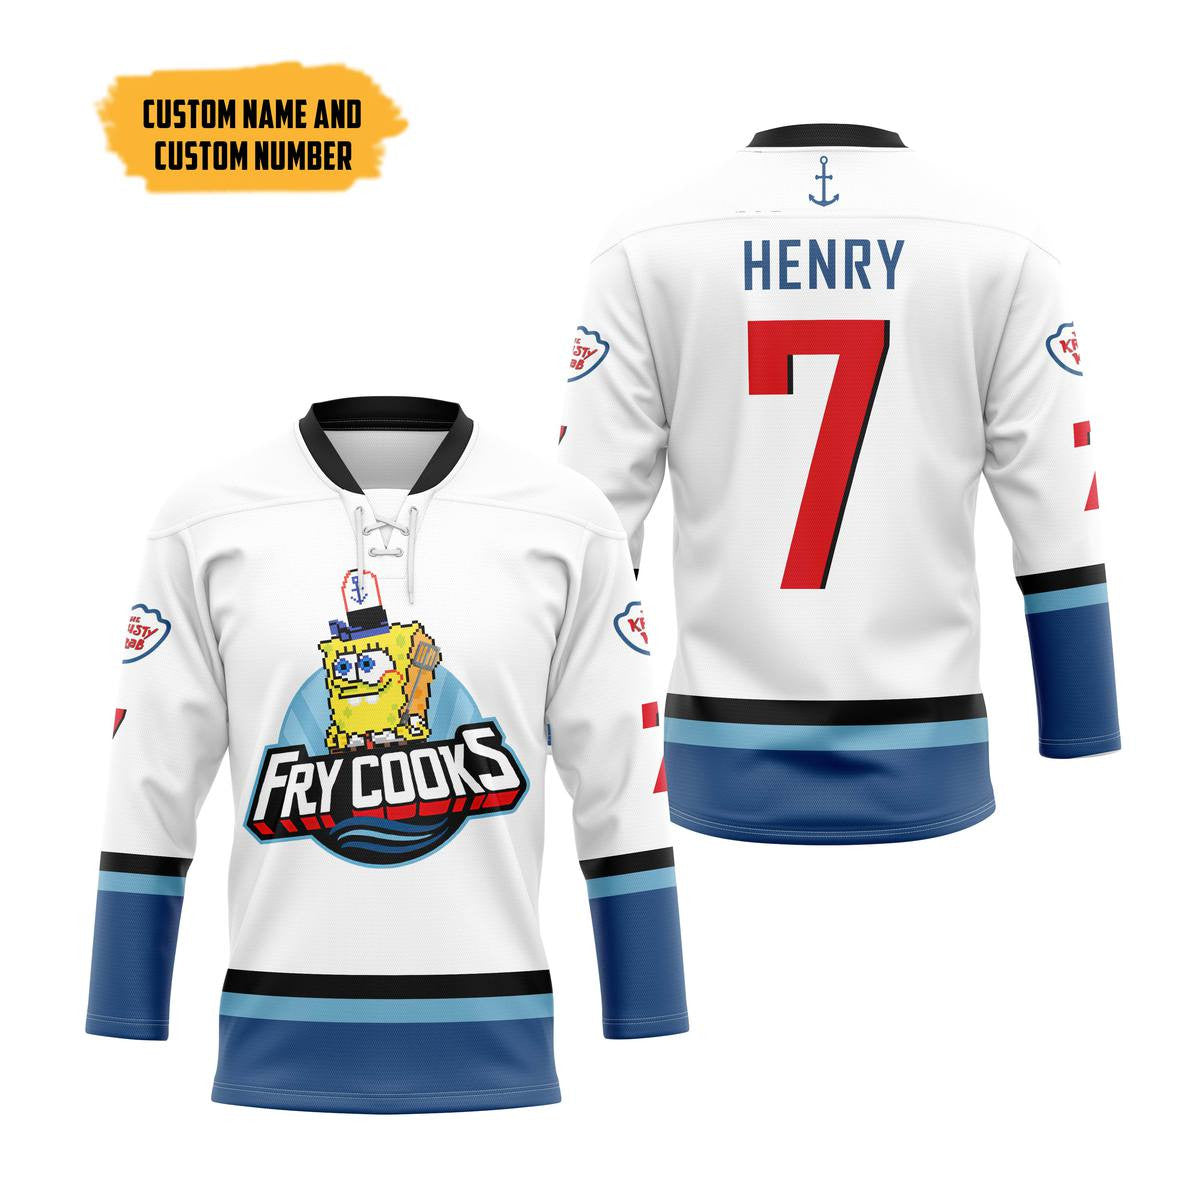 USA Hockey's NTDP on Instagram: SpongeBob jerseys are here! 🍍